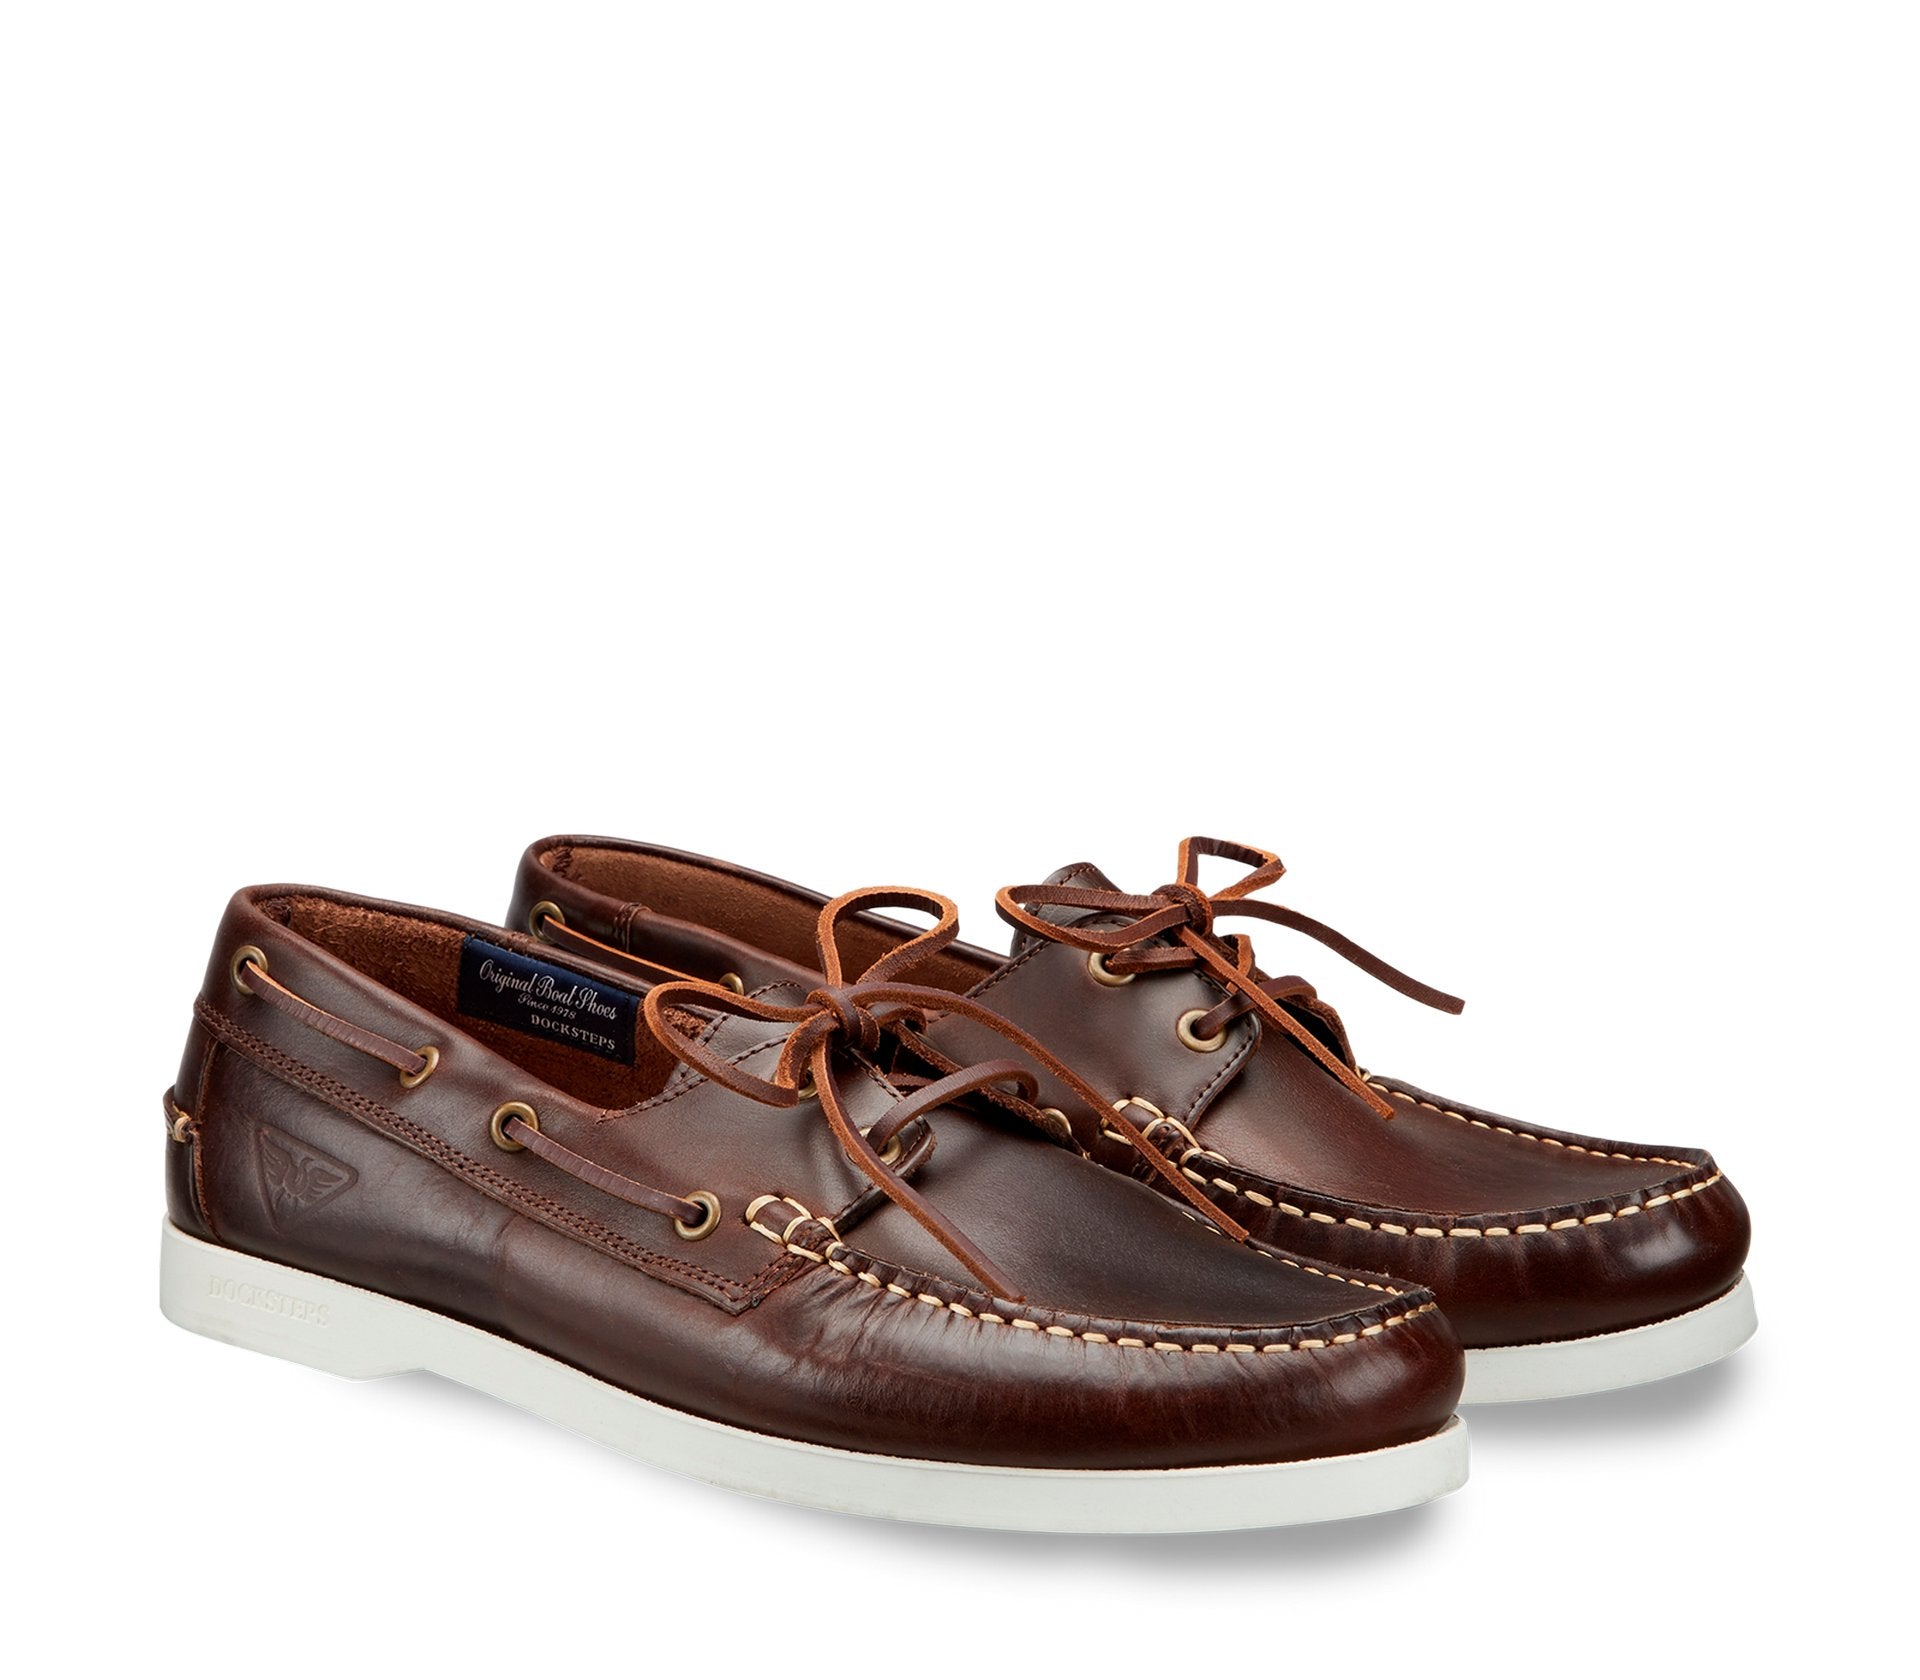 Beige Leather Men's Boat Shoes